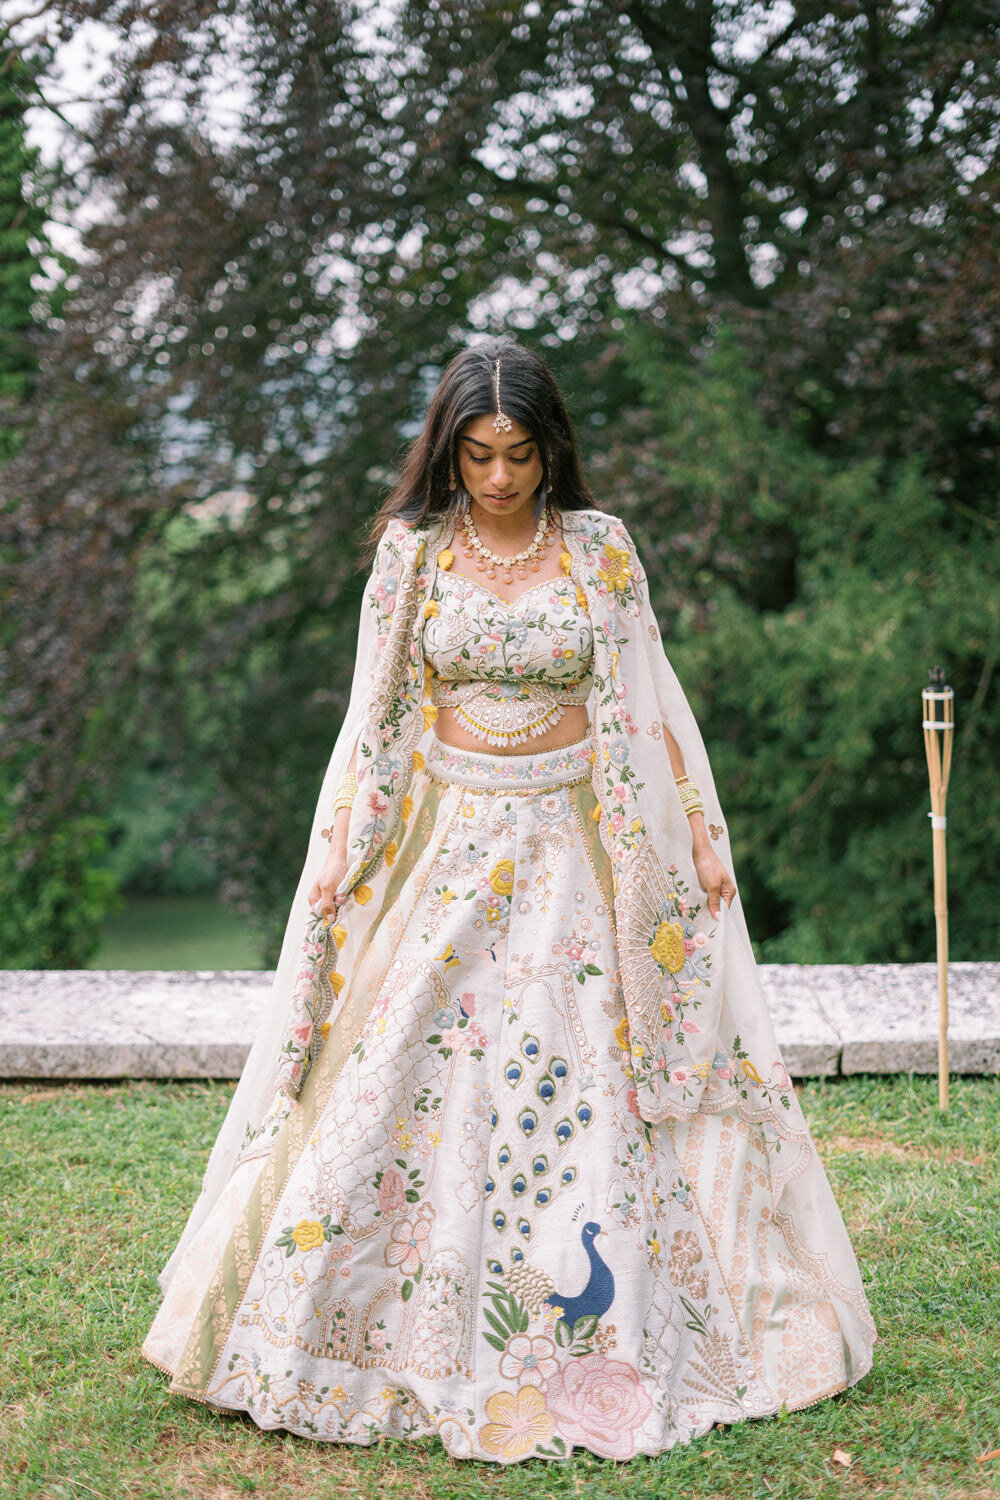 Indian wedding france - Harriette Earnshaw Photography-043